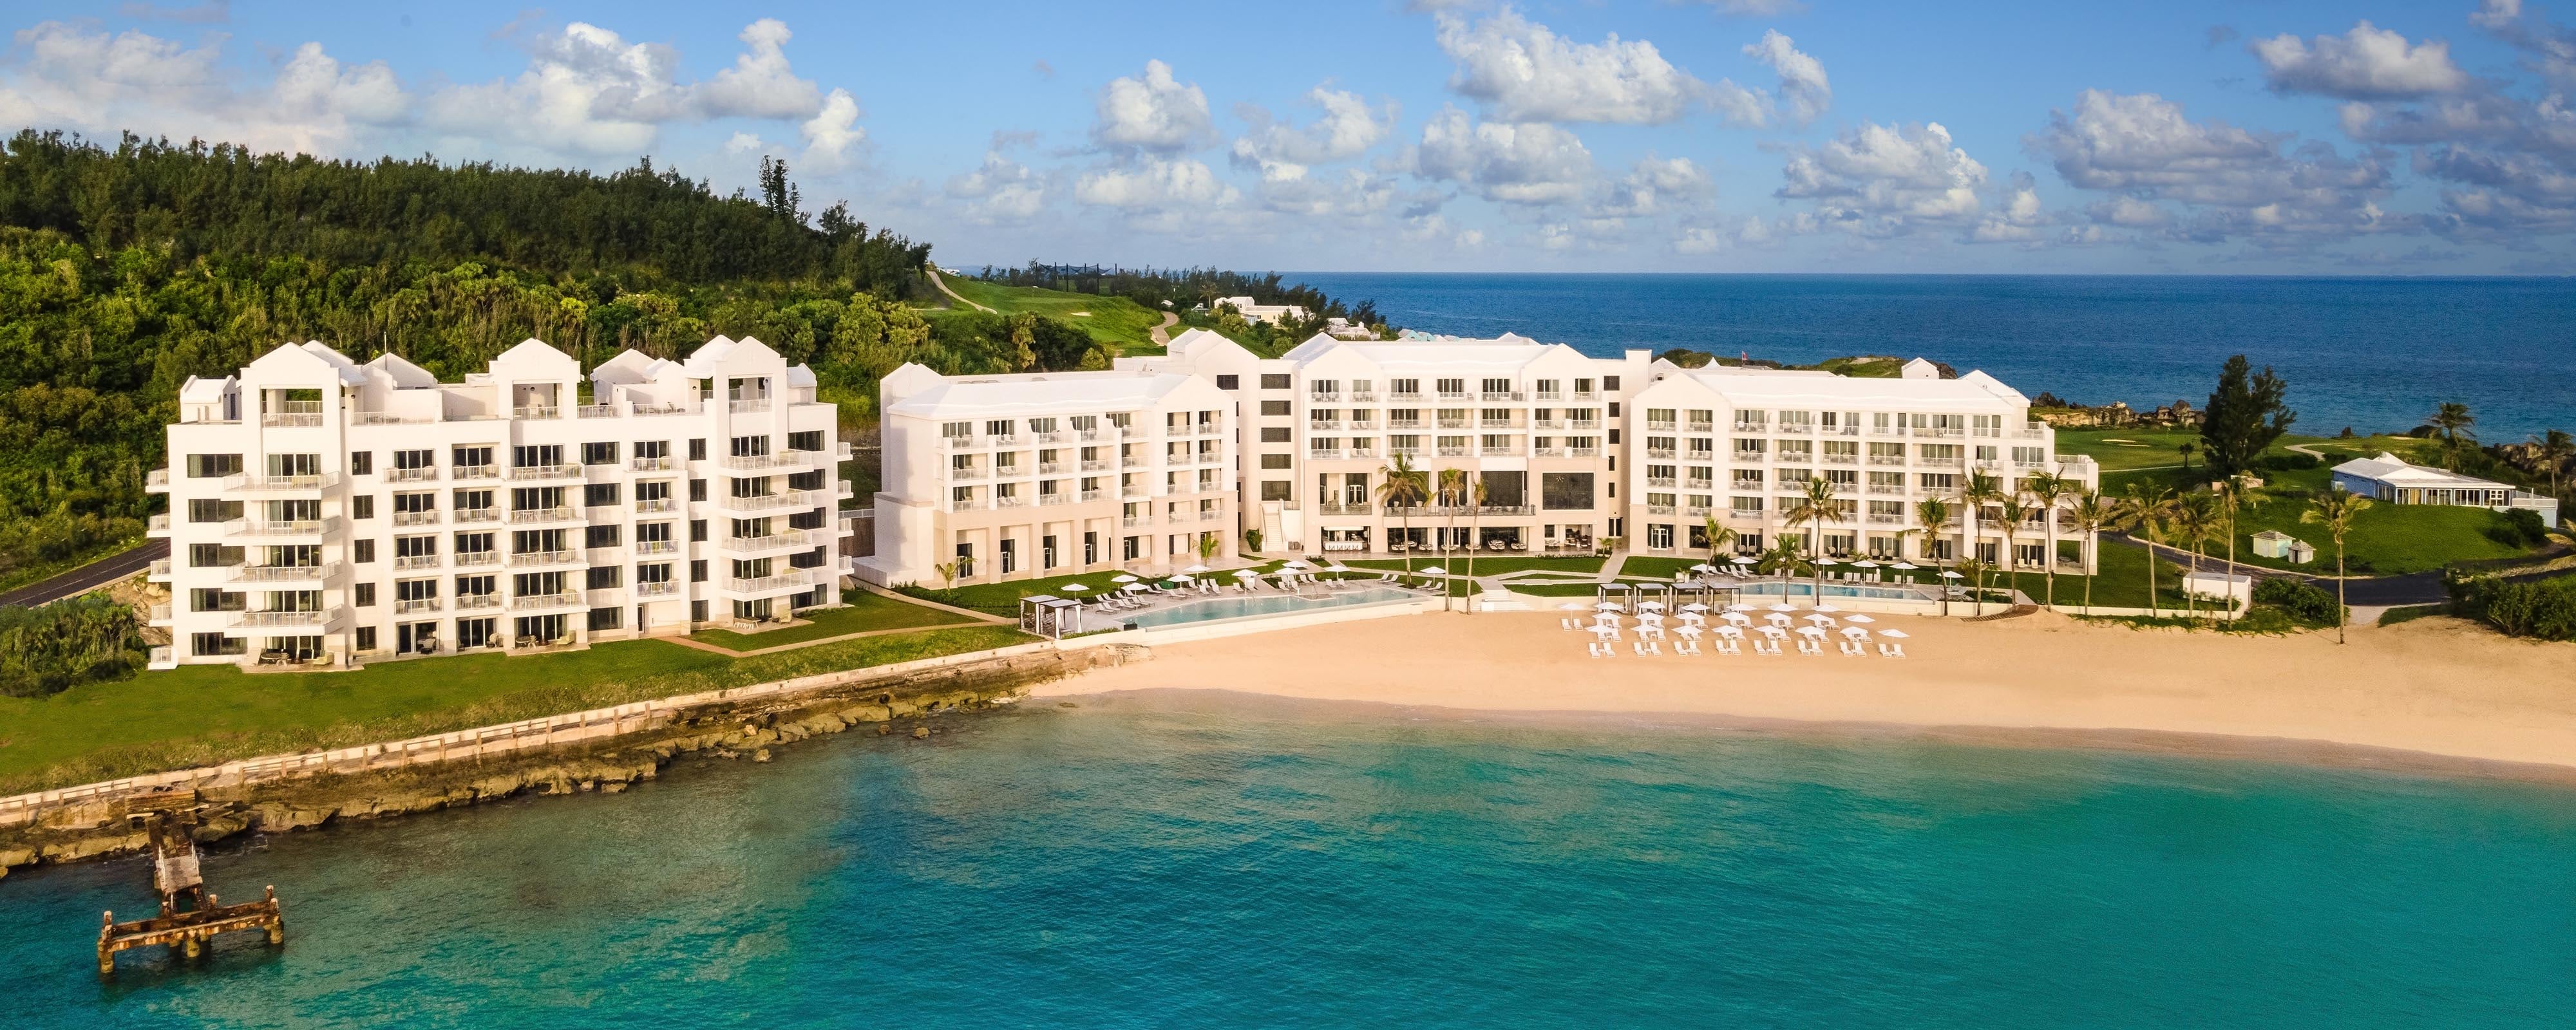 Image for The St. Regis Bermuda Resort, a Marriott hotel.